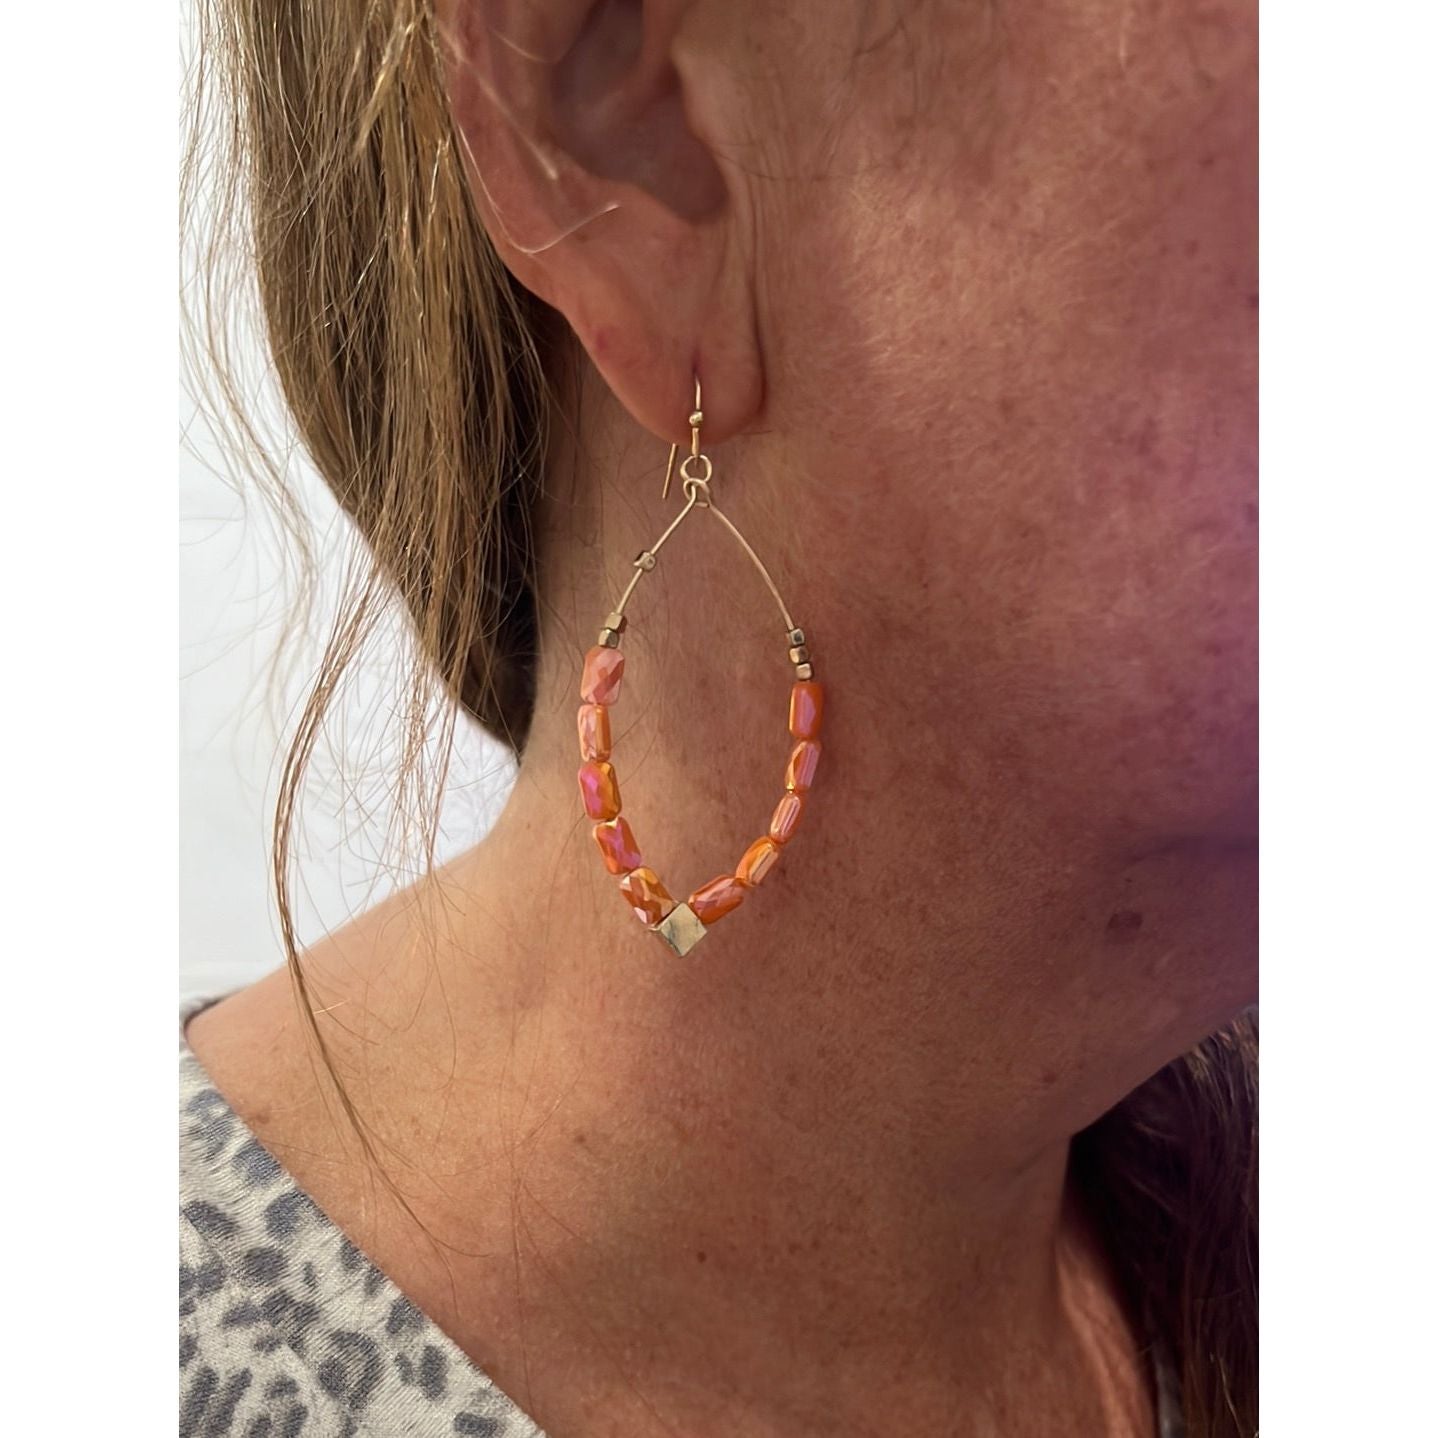 Gold teardrop beaded earrings. Coral